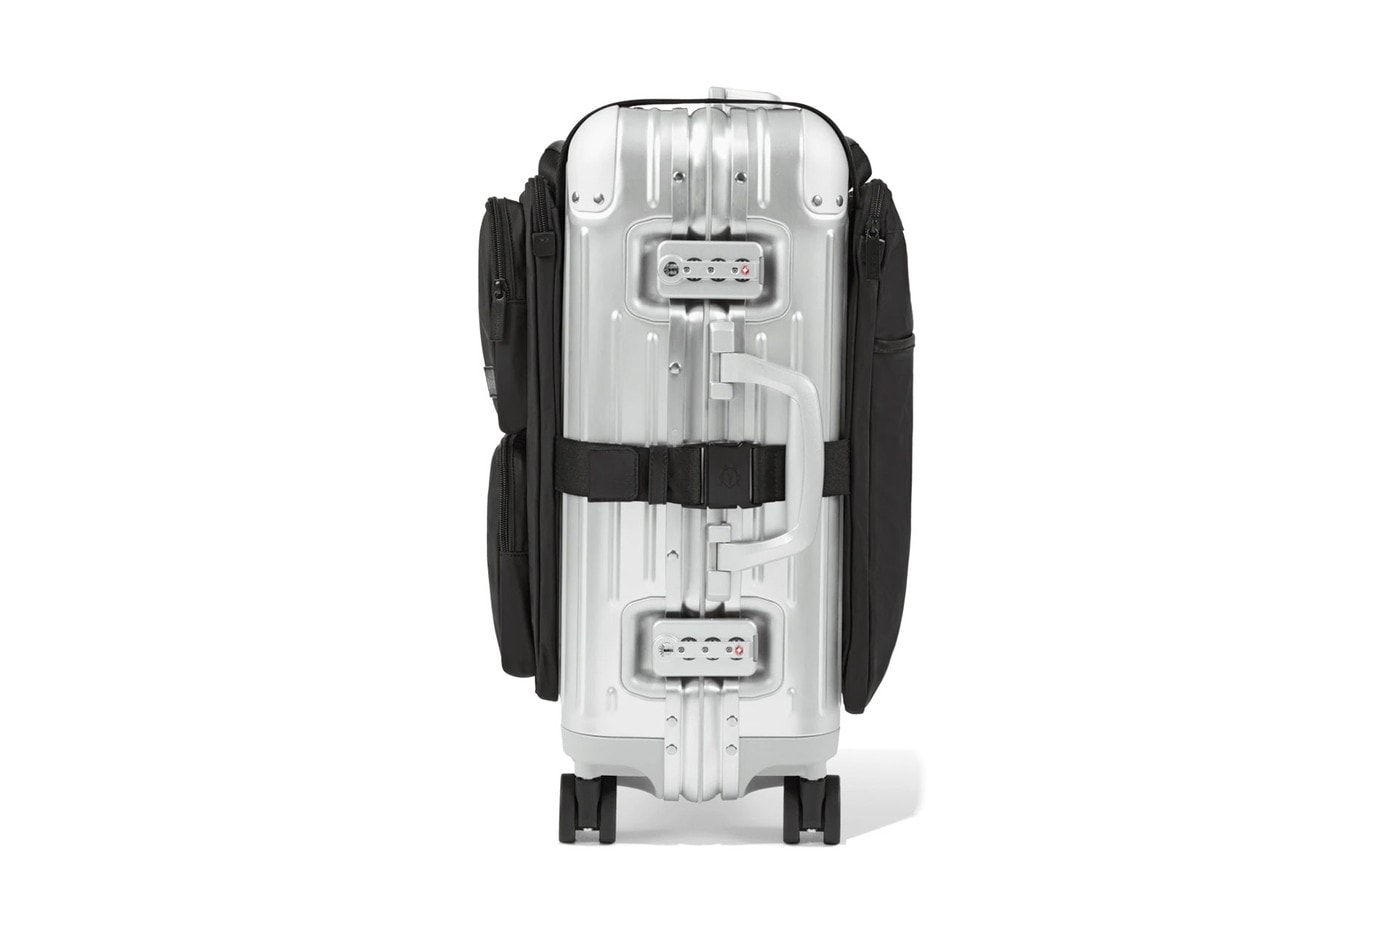 rimowa cabin luggage harness release